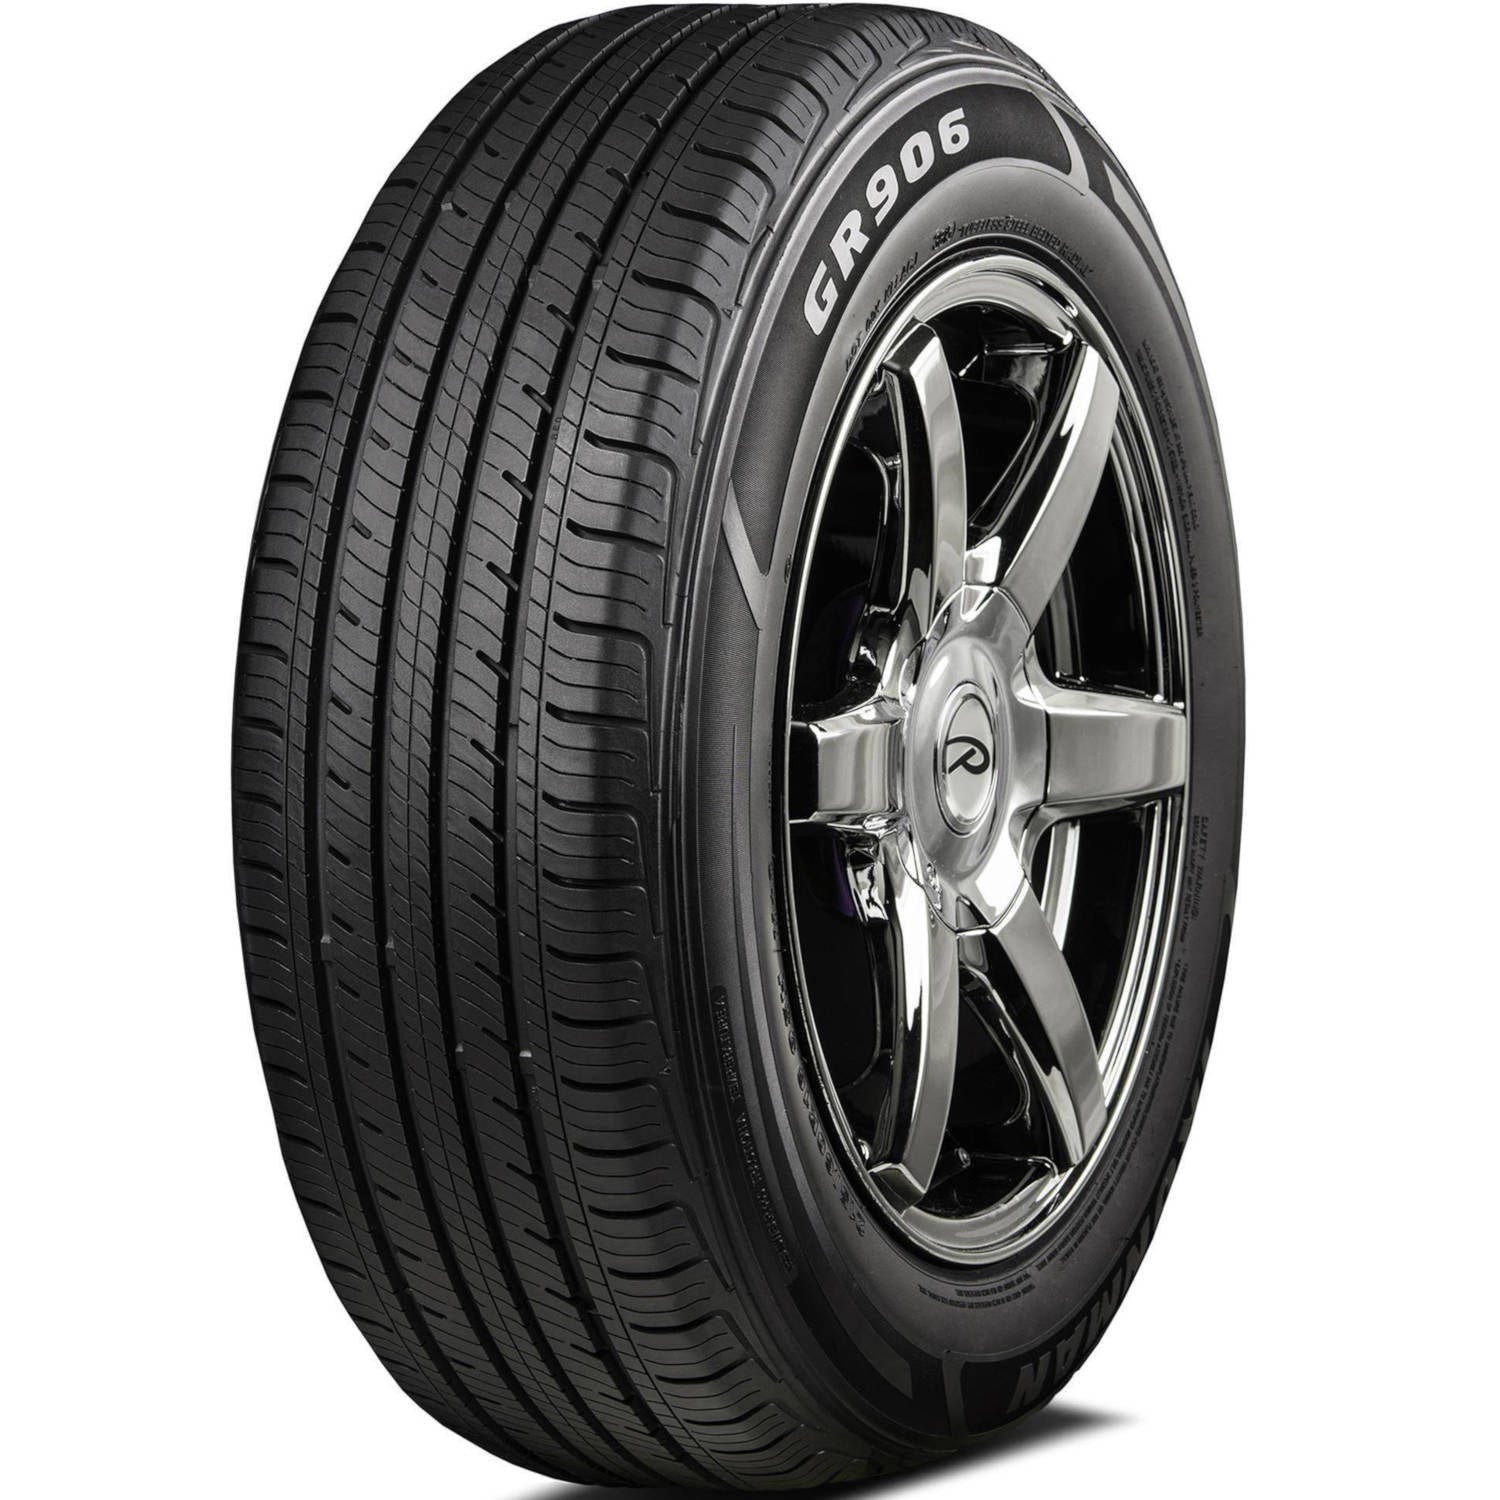 IRONMAN GR906 205/55R16 (24.9X8.1R 16) Tires